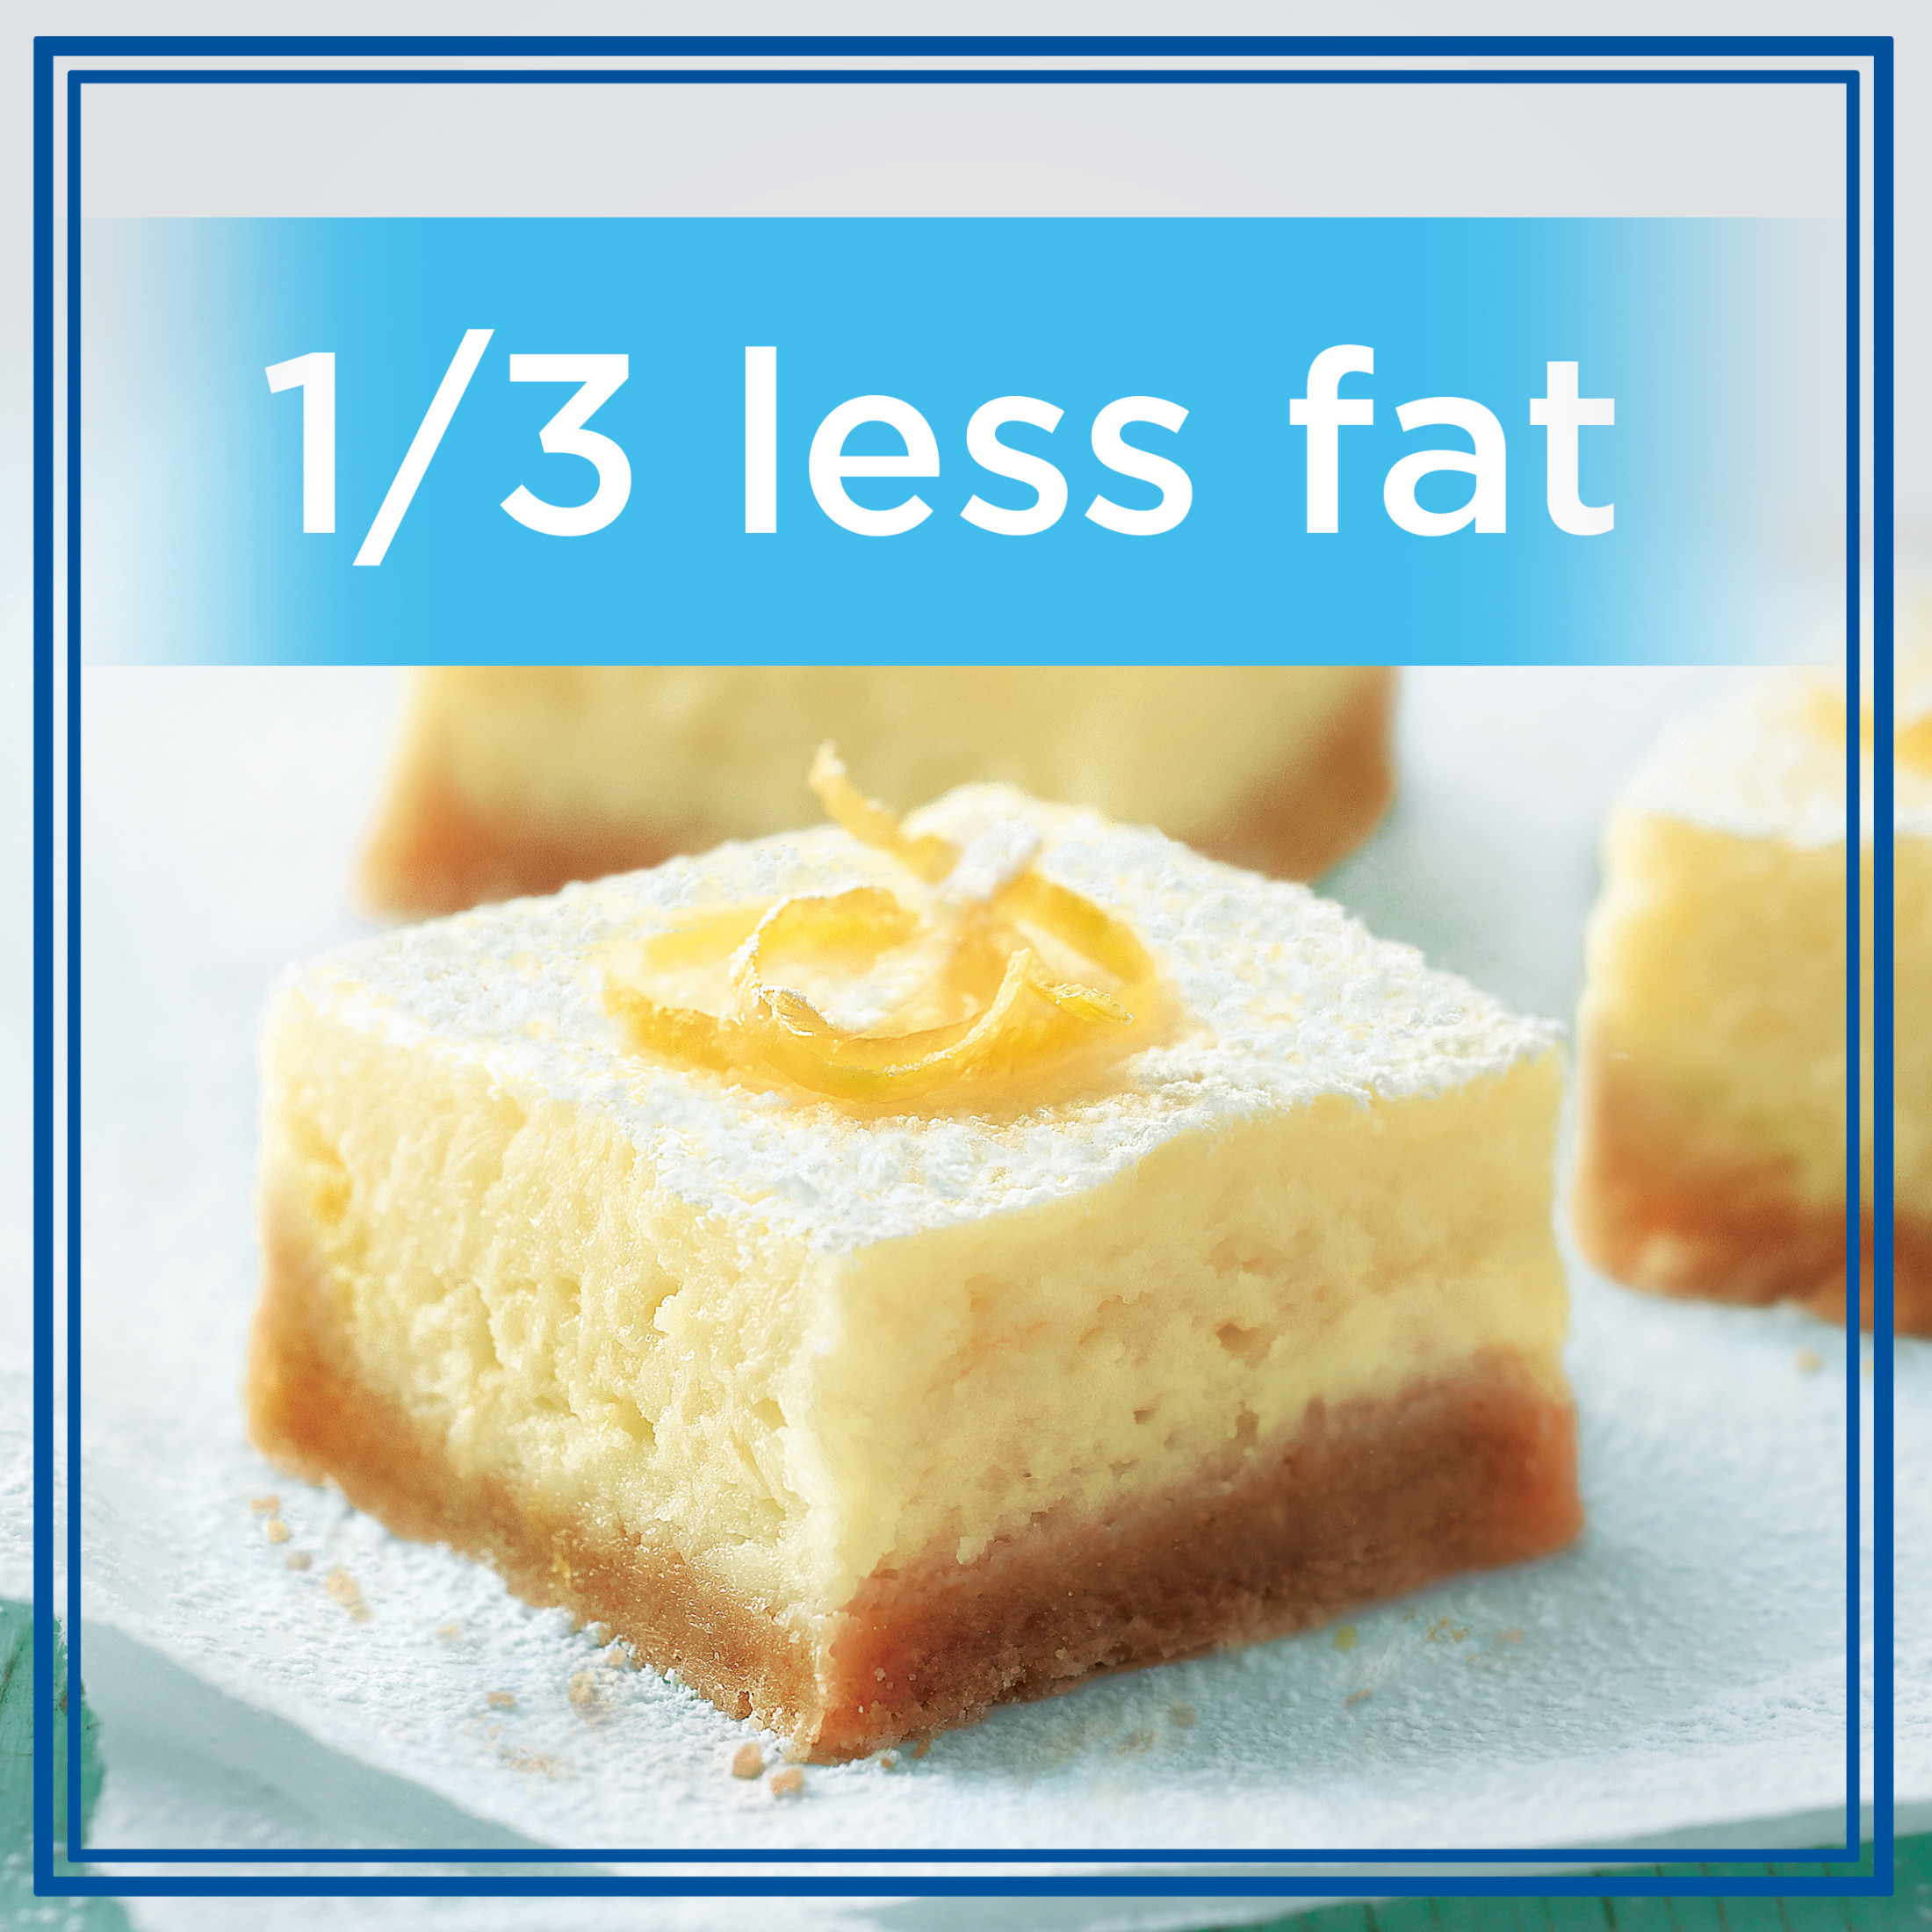 Philadelphia Reduced Fat Cream Cheese 1/3 Less Fat, 8 oz Brick - image 4 of 14